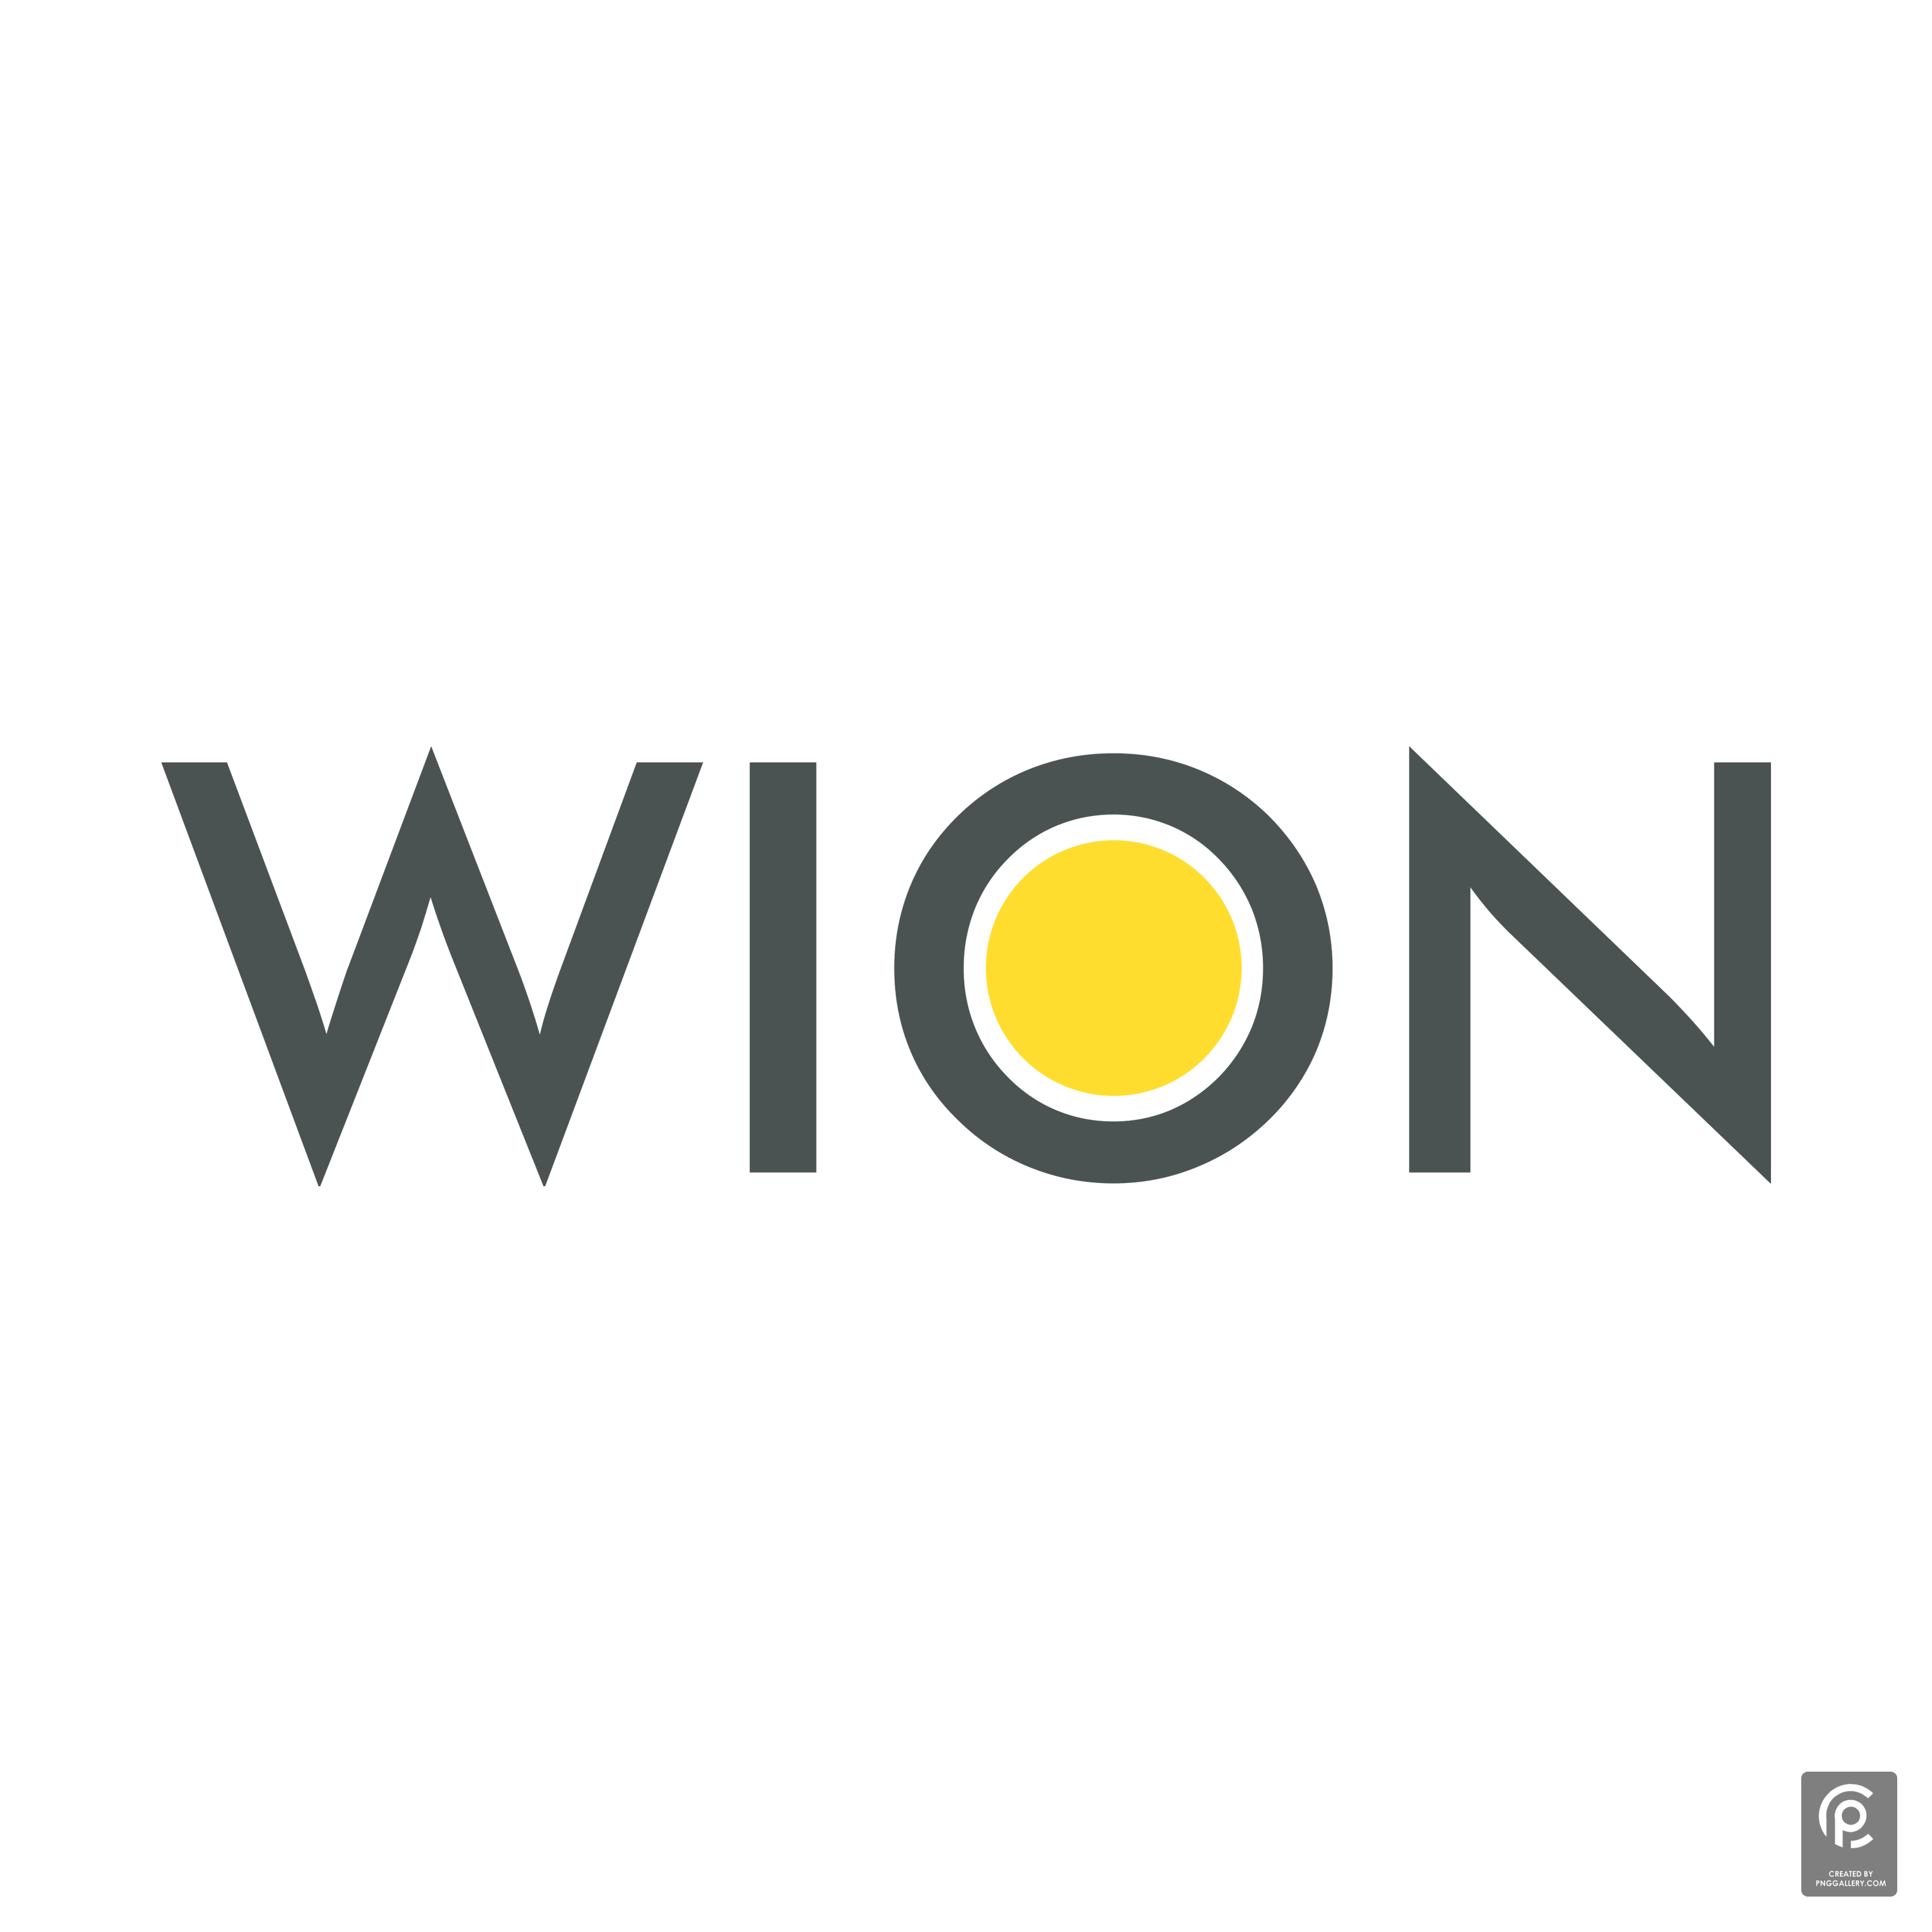 WION Logo Transparent Gallery